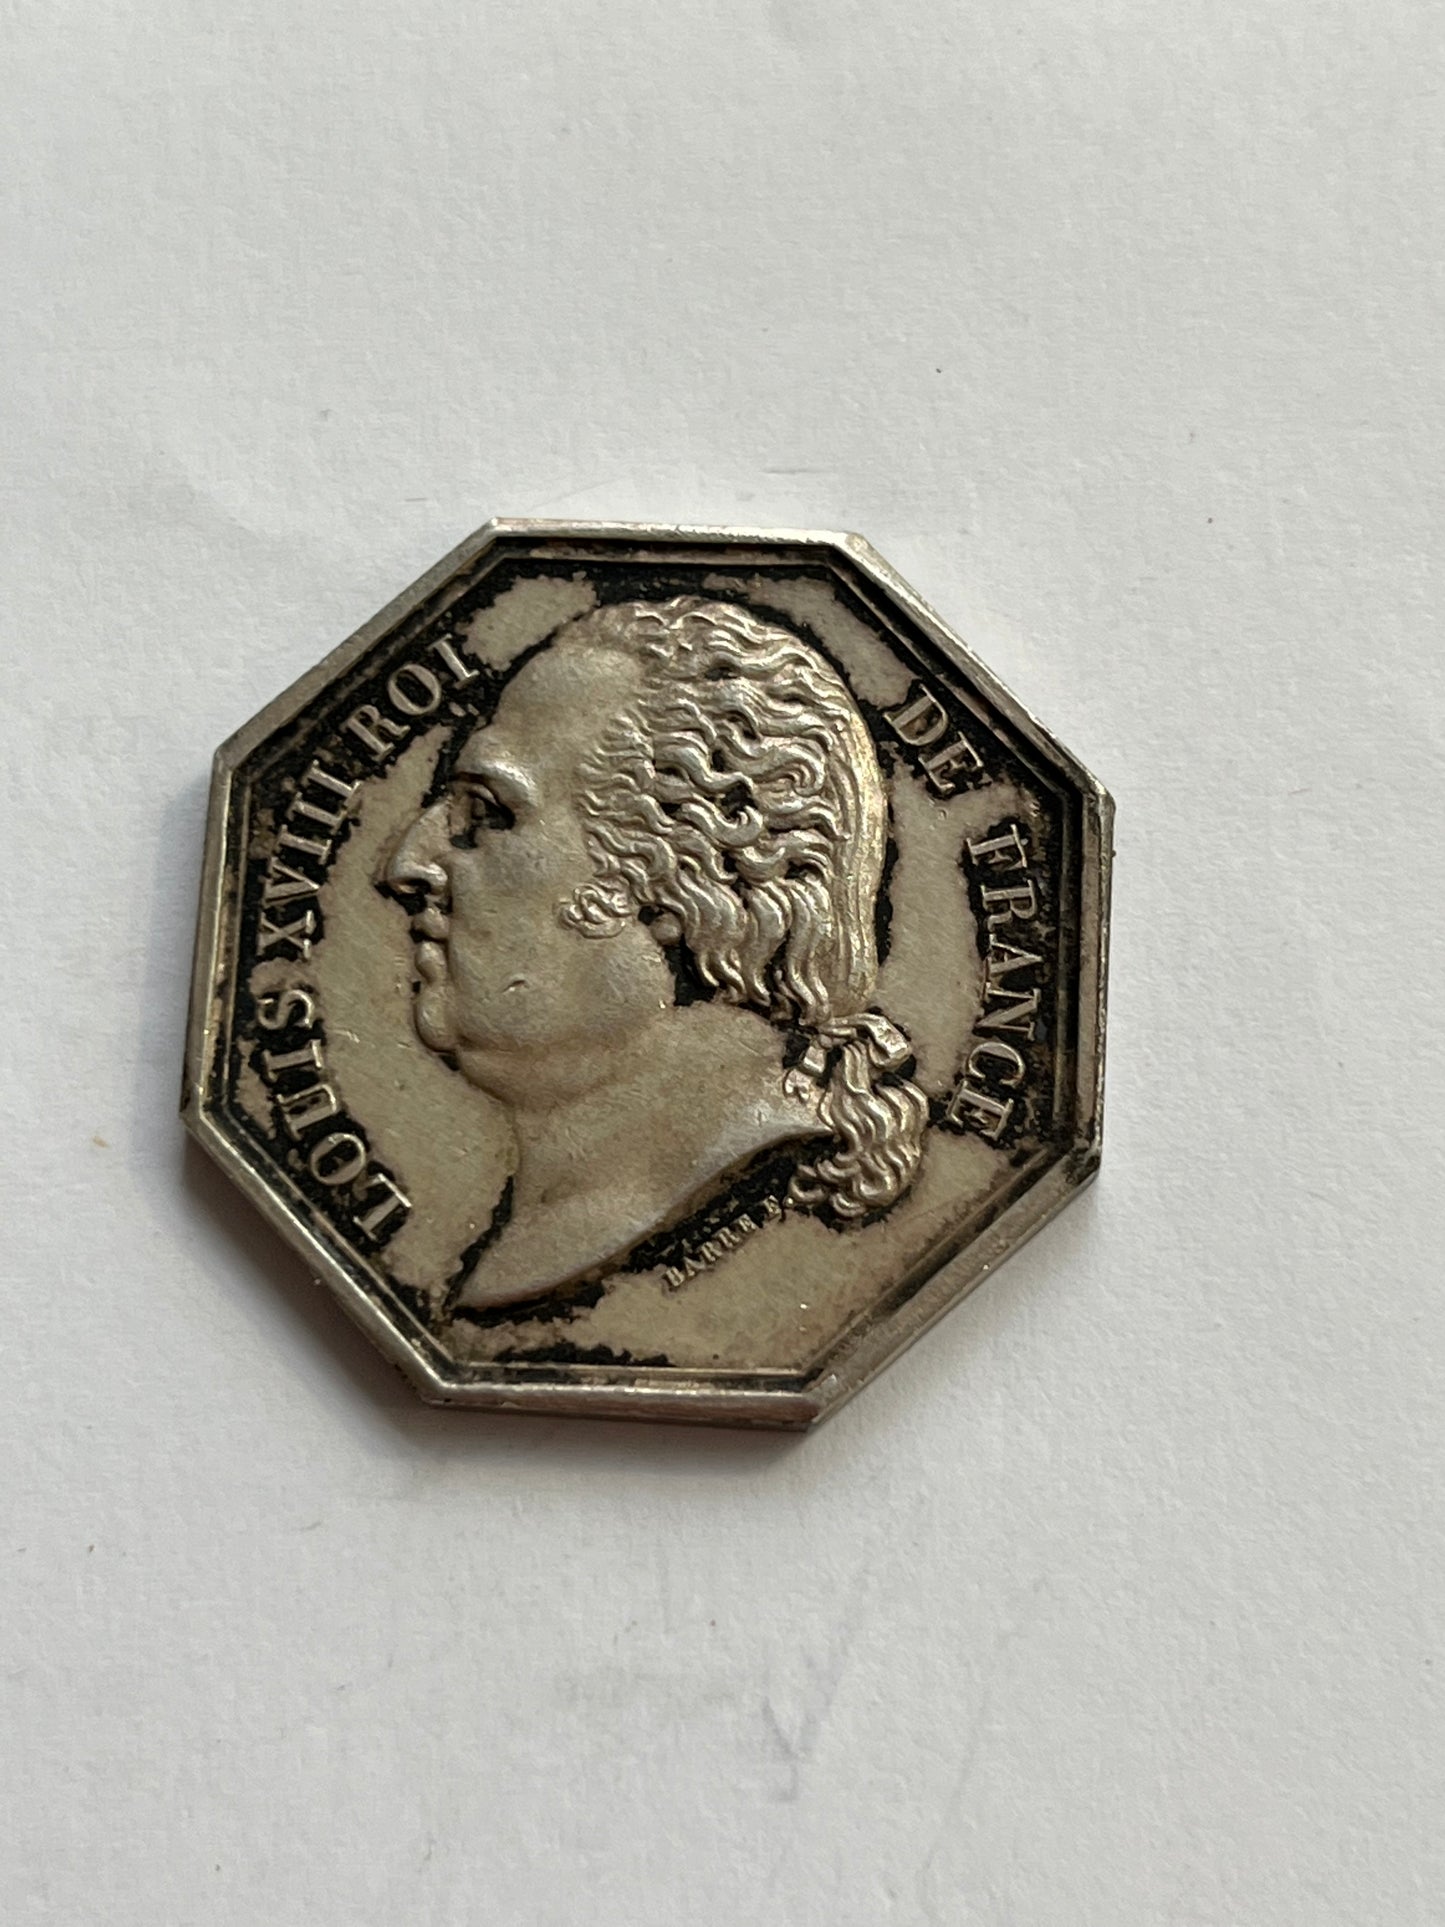 Silver token, Notaries, Louis XVIII, Mantes